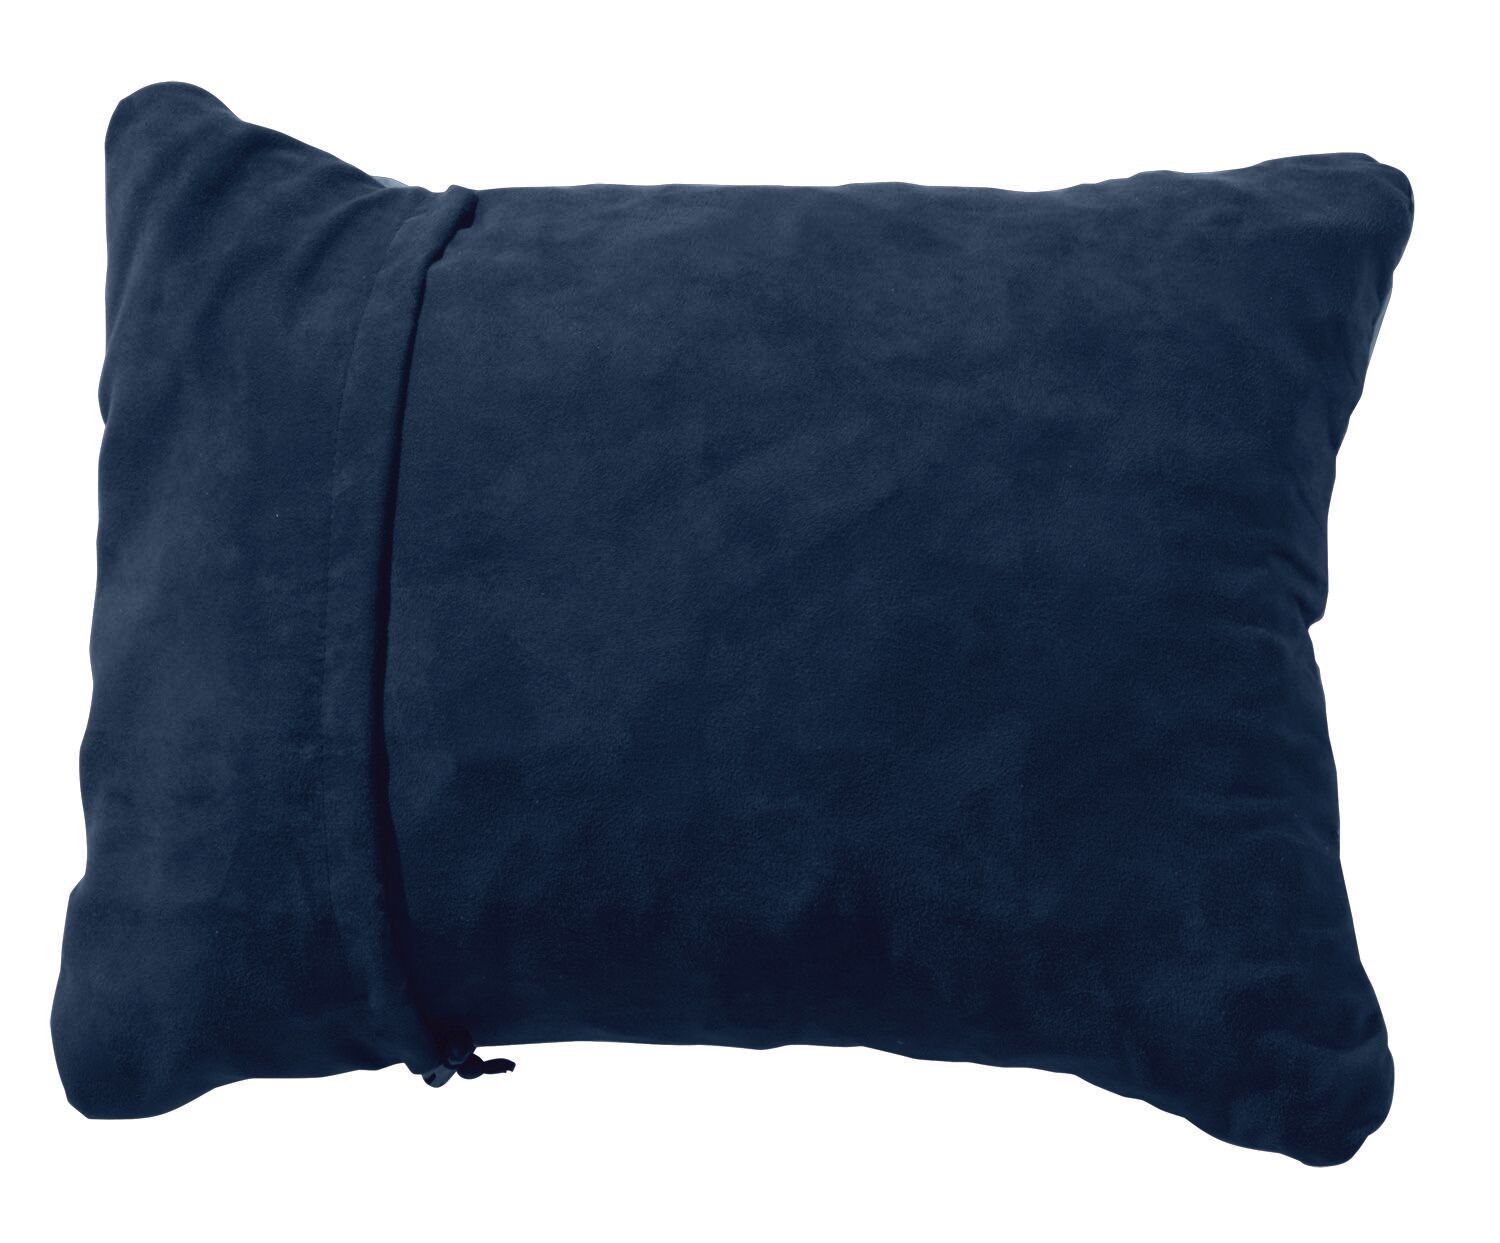 Thermarest Pillow Medium - Kudde